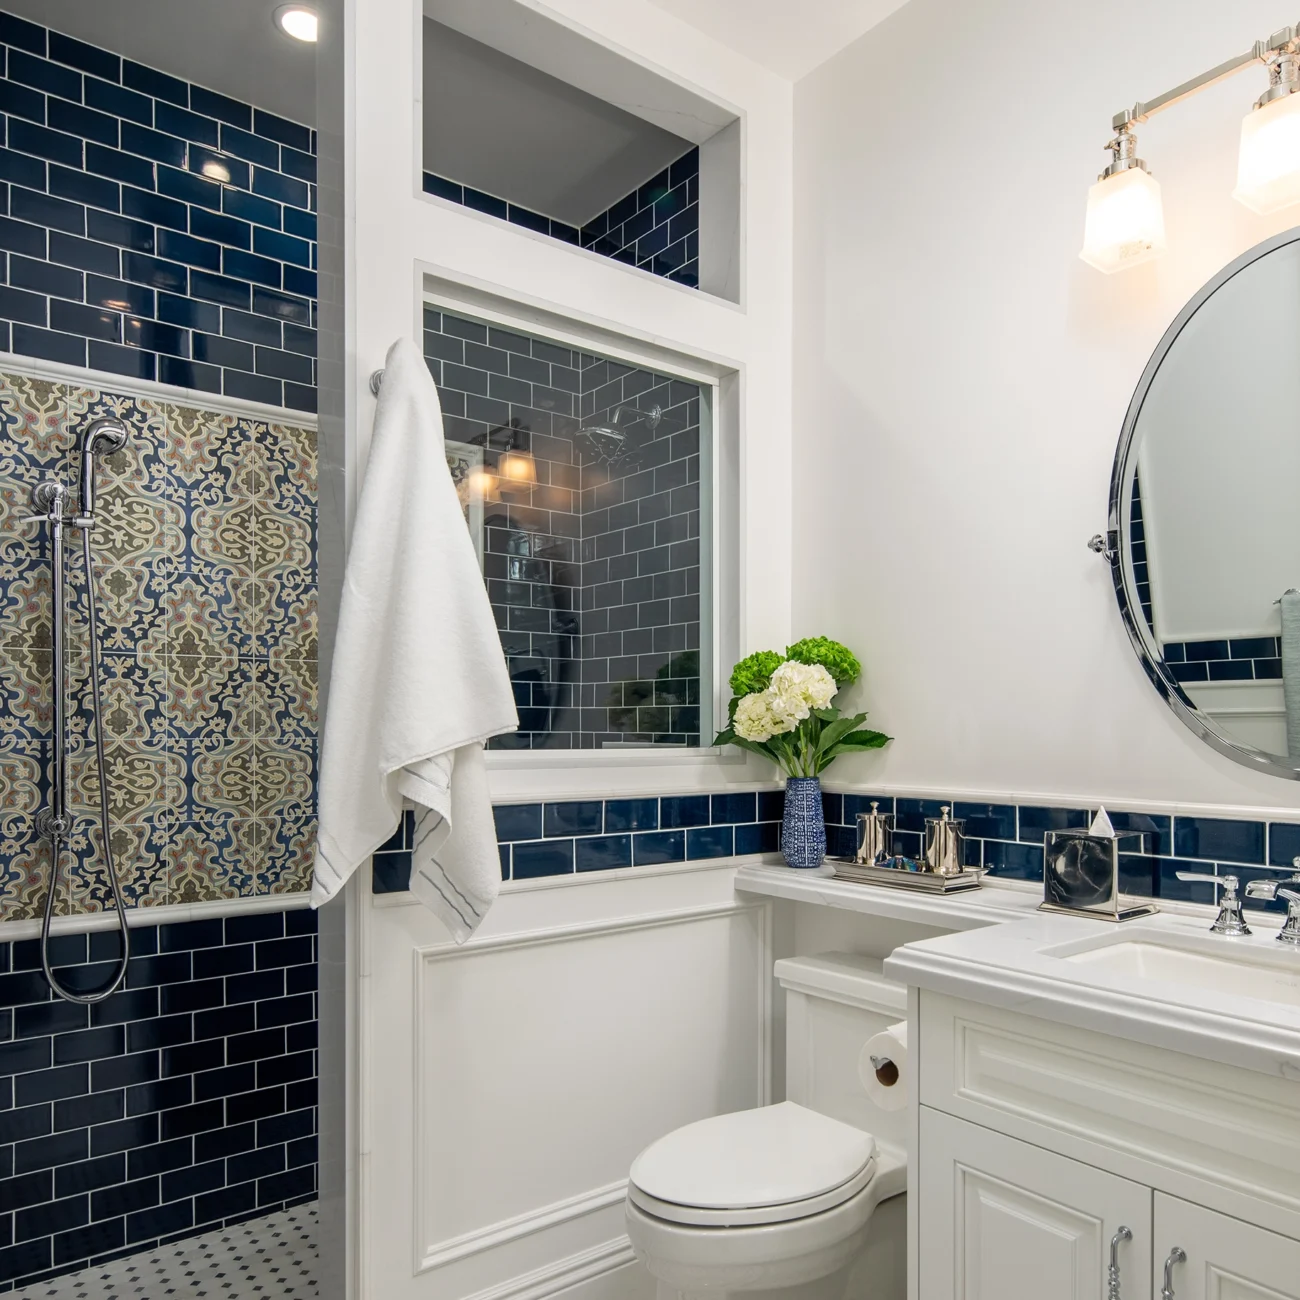 Christine Vroom Interiors Strawberry Lane | Dark blue subway tiles in contemporary bright white bathroom